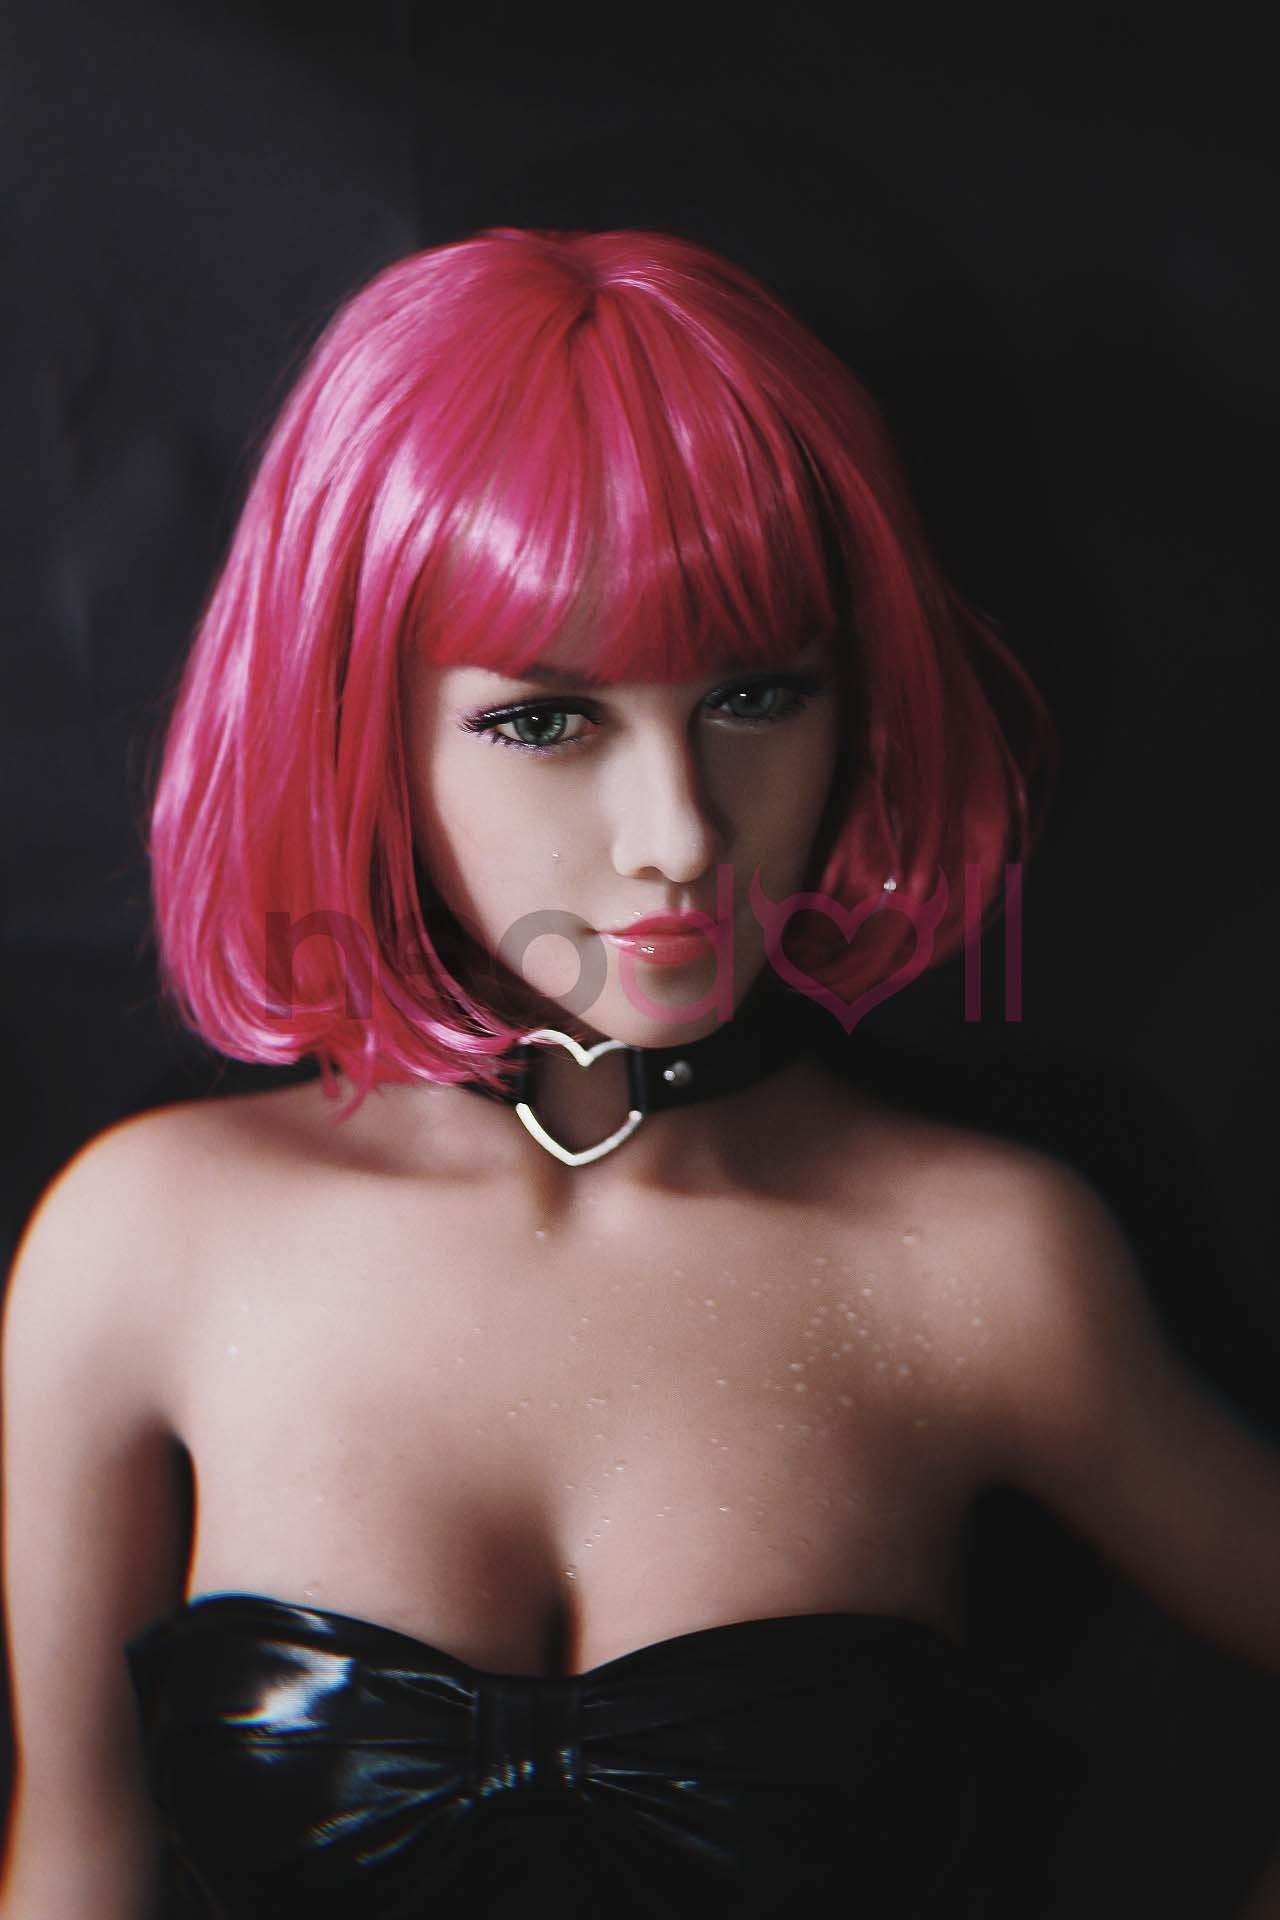 Neodoll Sugar Babe - Pag - Realistic Sex Doll - Gel Breast - Uterus - 150cm - Tan